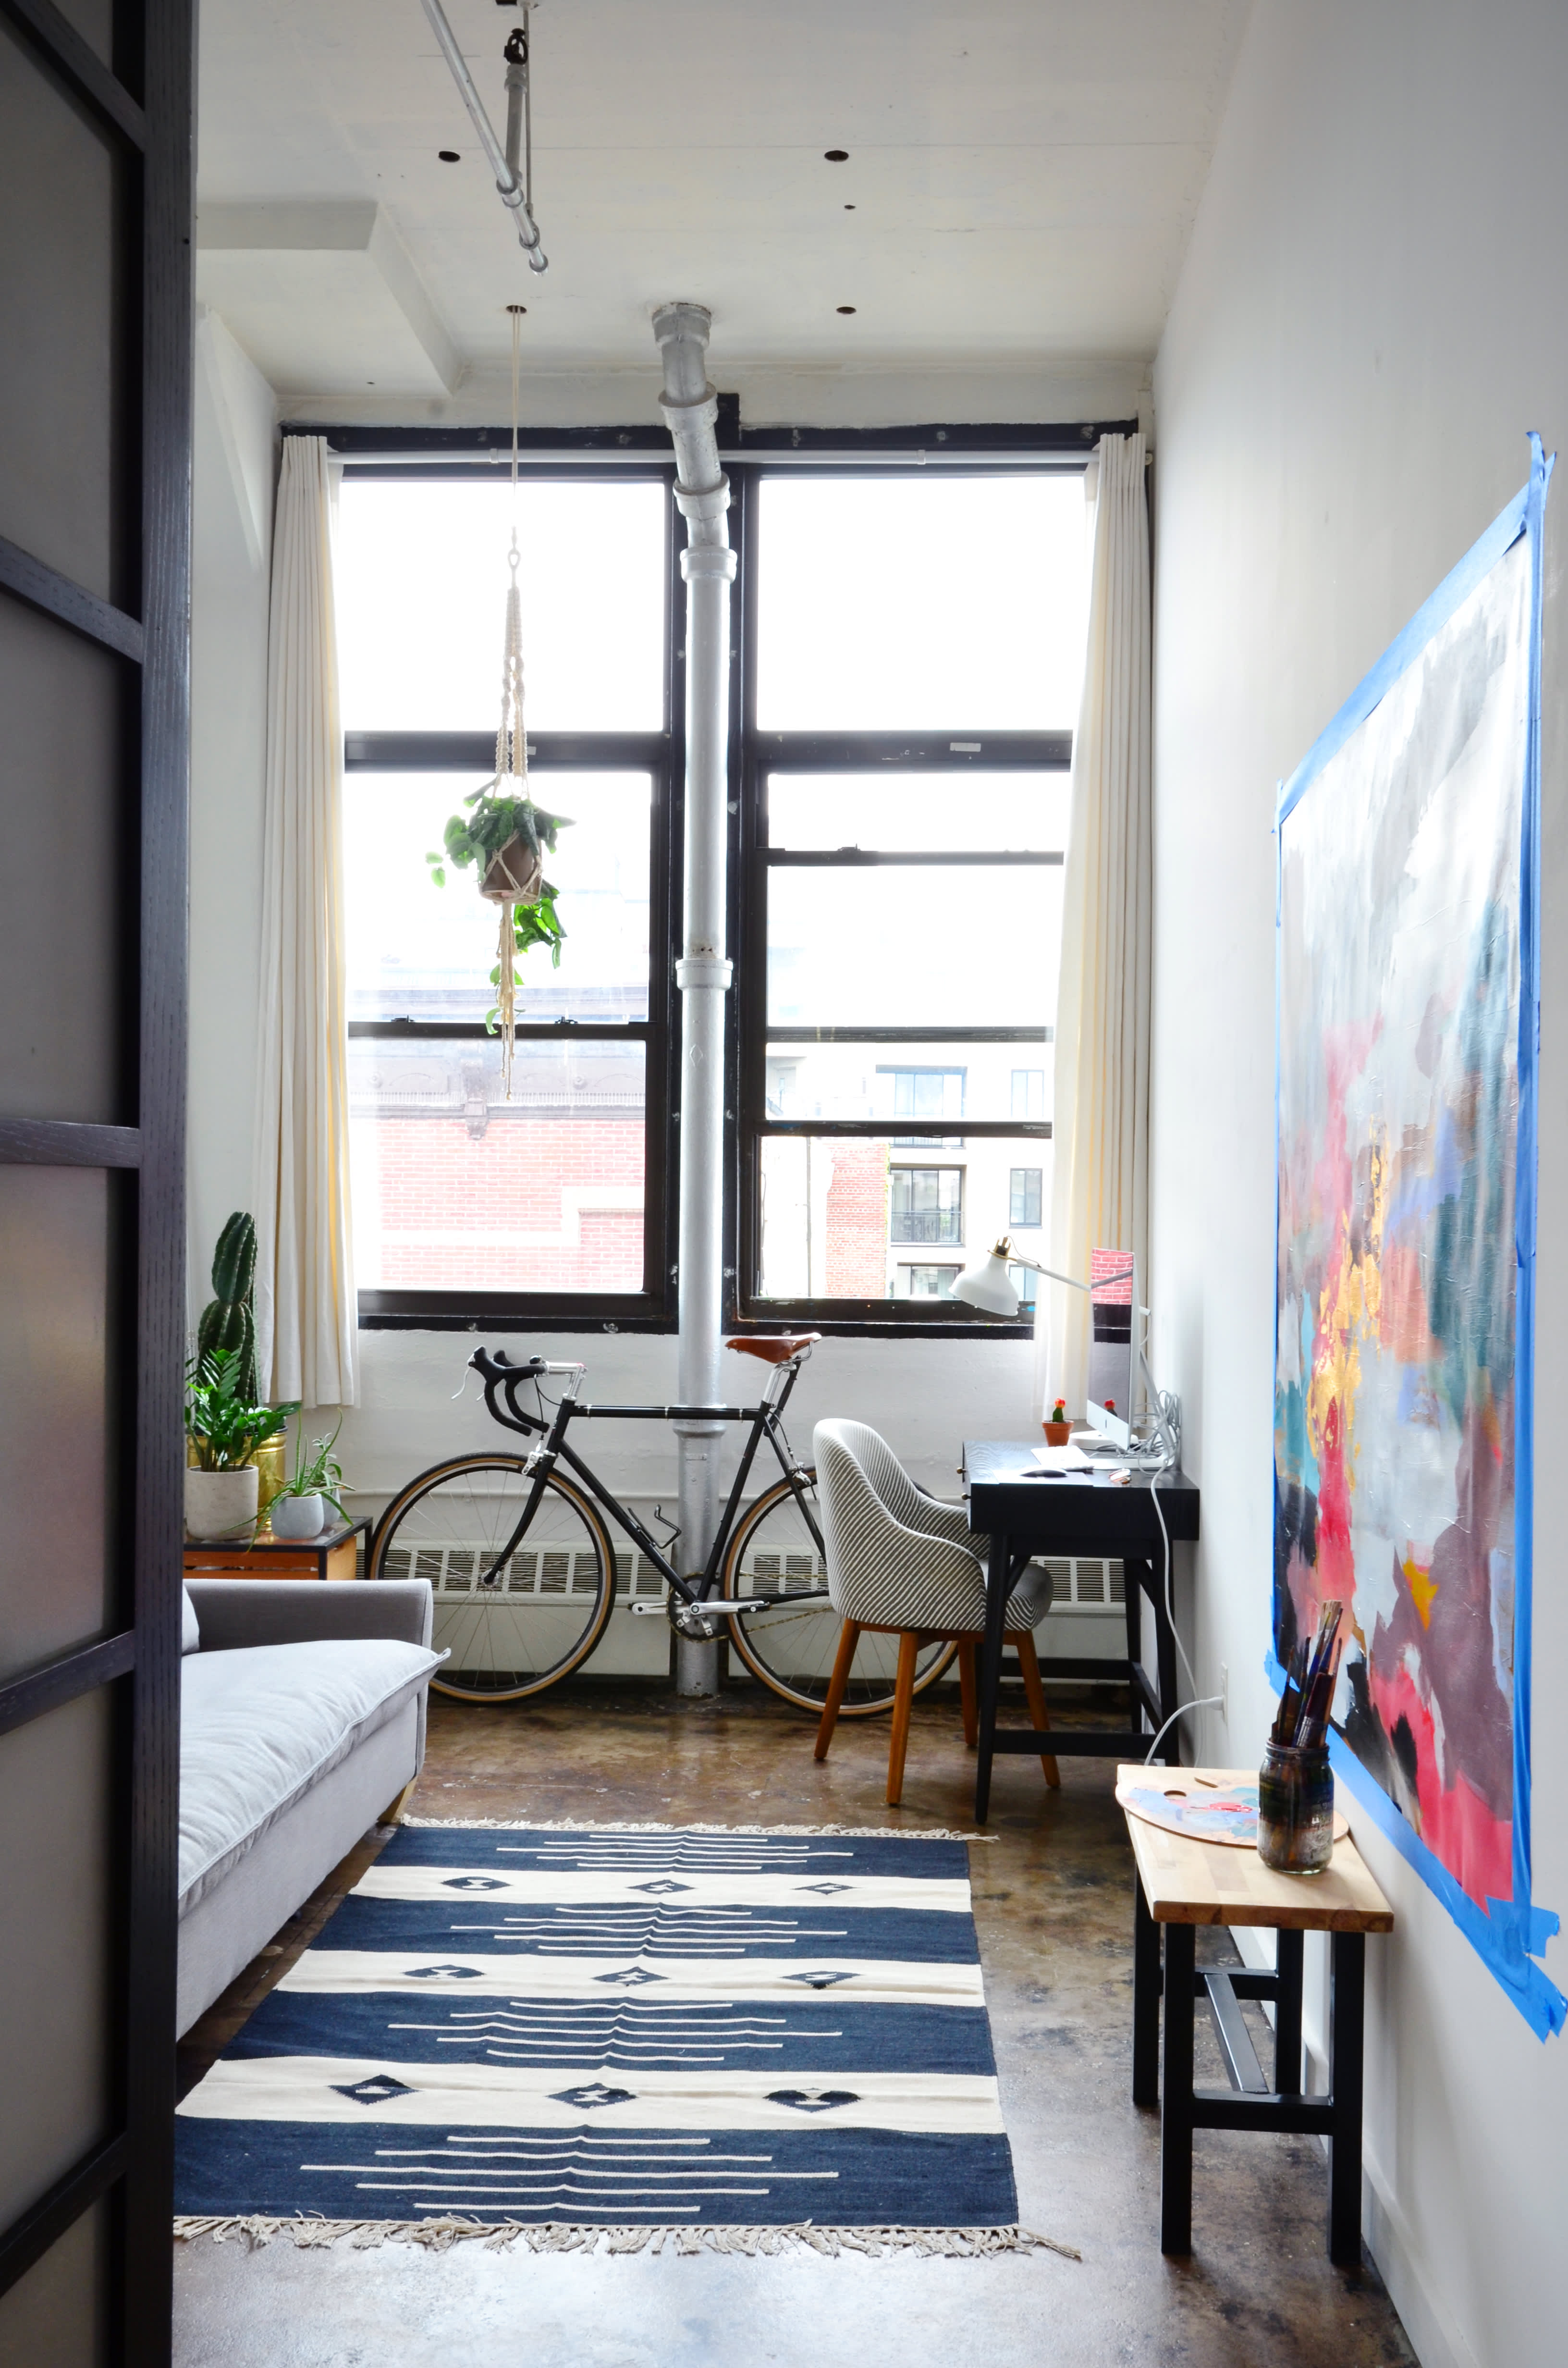 Tour a Flawless Take on the Brooklyn Artist's Loft